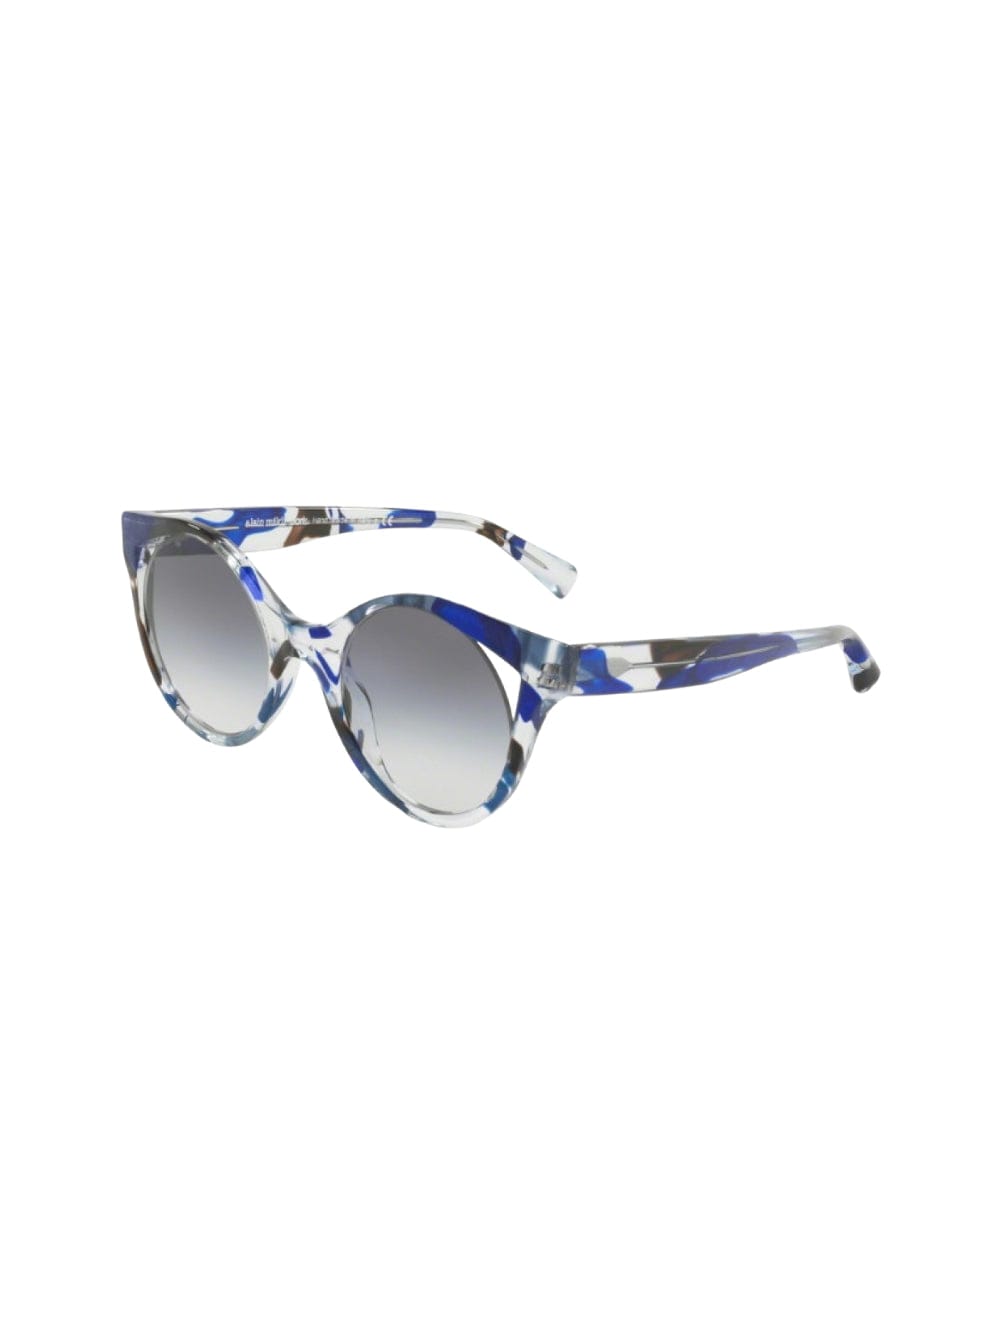 Alain Mikli Rayce - 5033 - Black / Blu Sunglasses